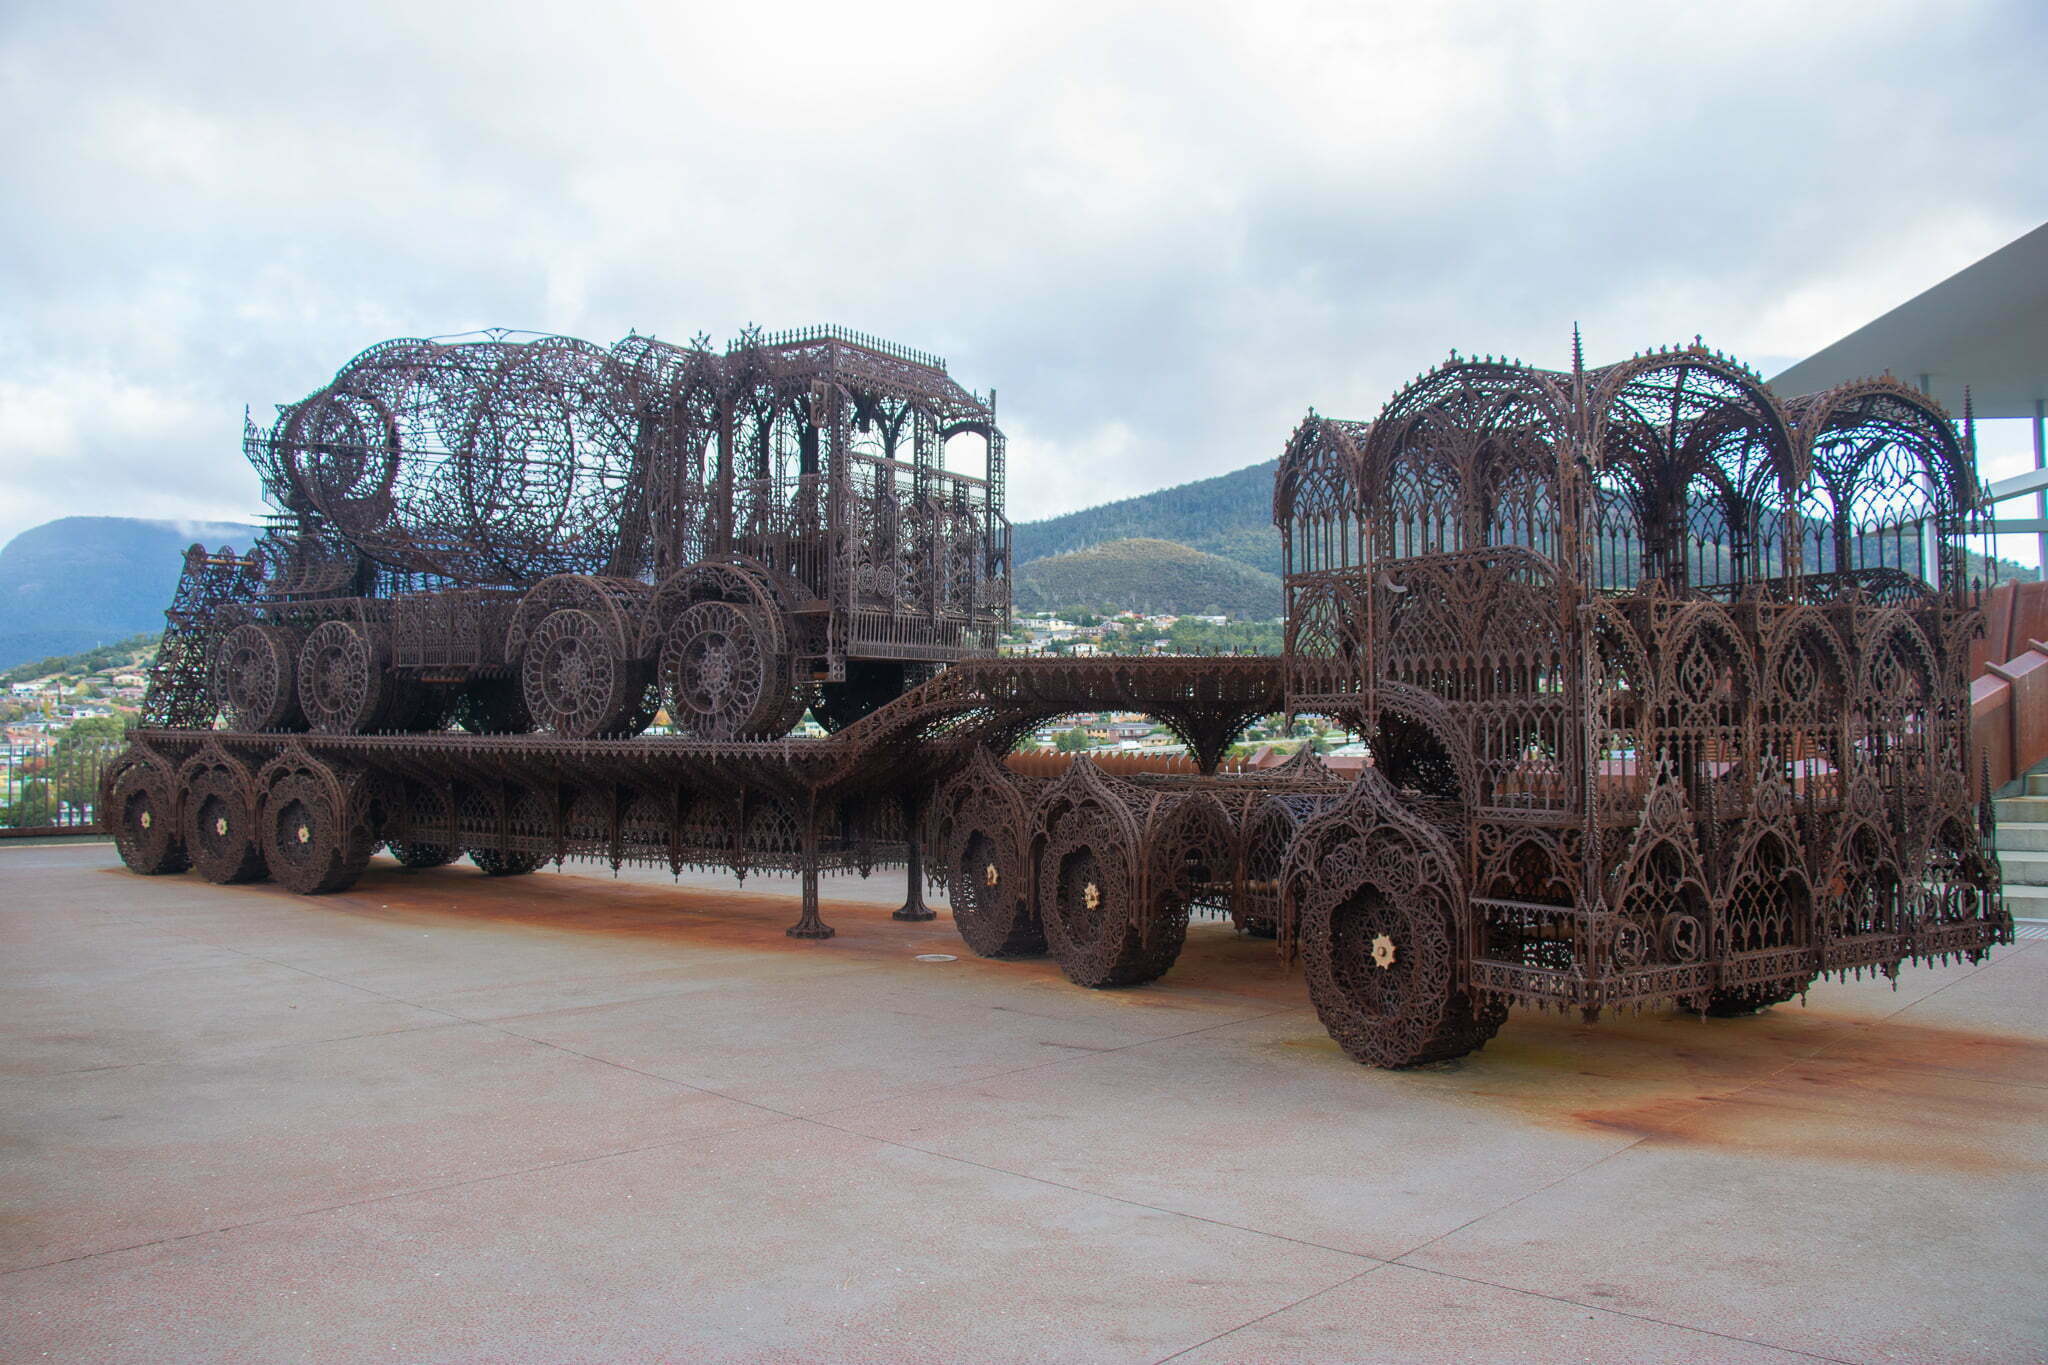 A wrought iron artwork shaped like a truck